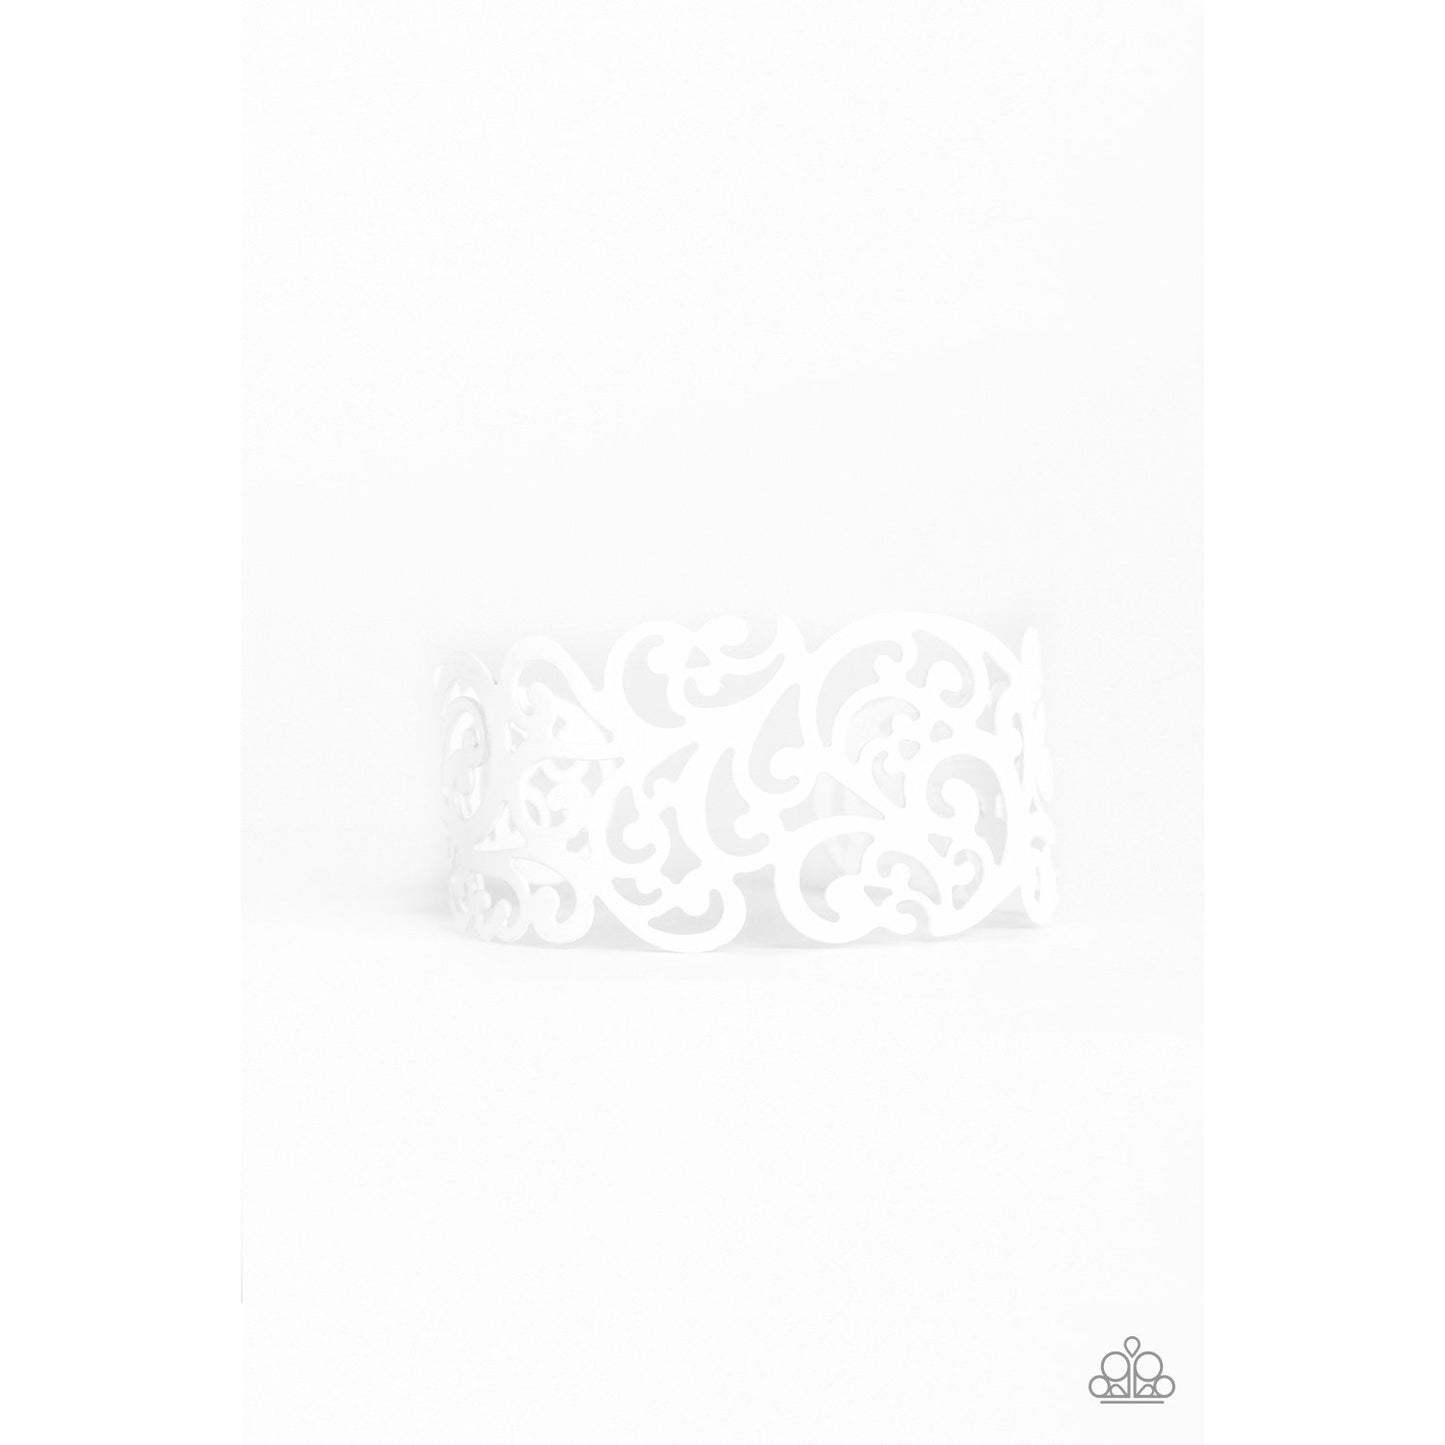 VINE and Dash - White bracelet